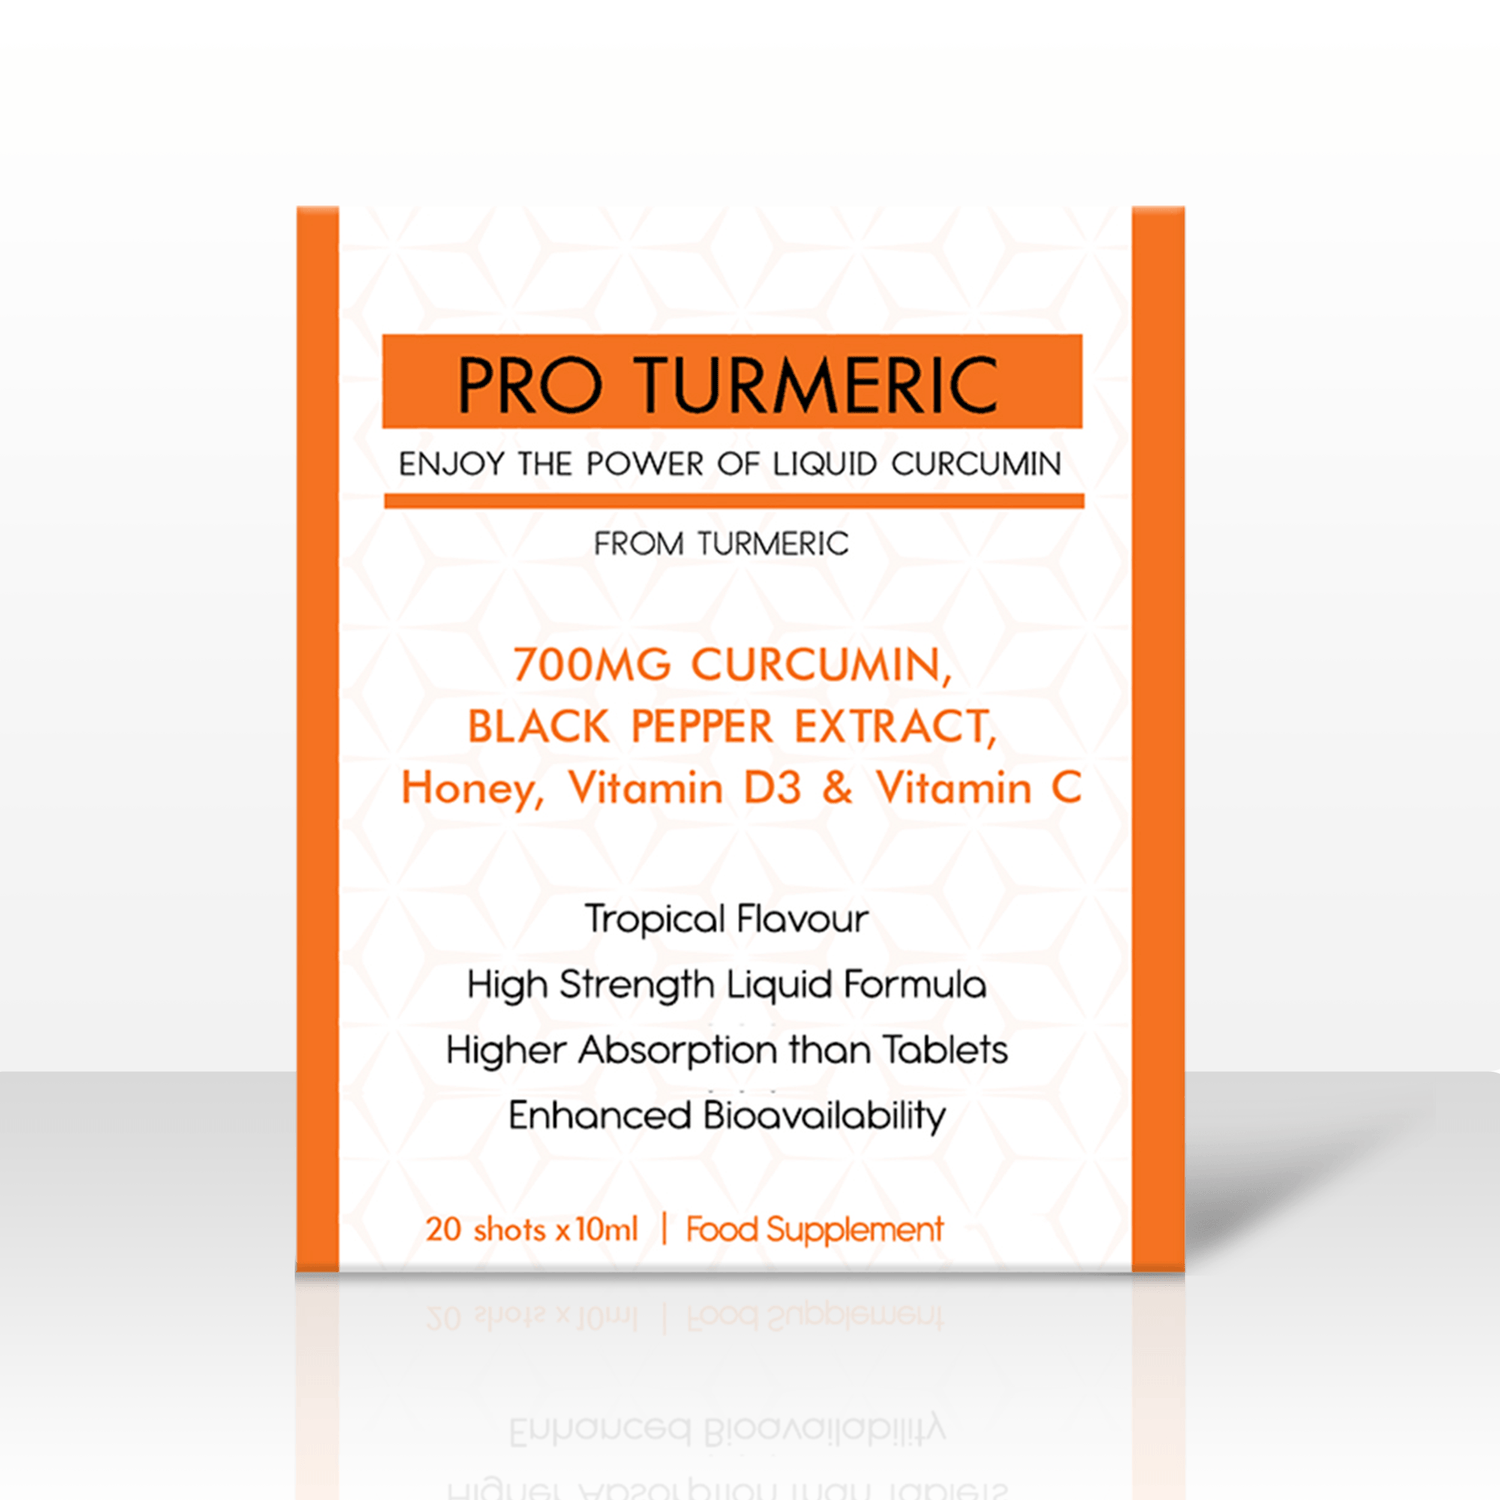 &lt;img src=&quot;pic.gif&quot; alt=&quot;Experience the Magic of Pro Turmeric Shots - Empower Your Health Journey&quot; /&gt;